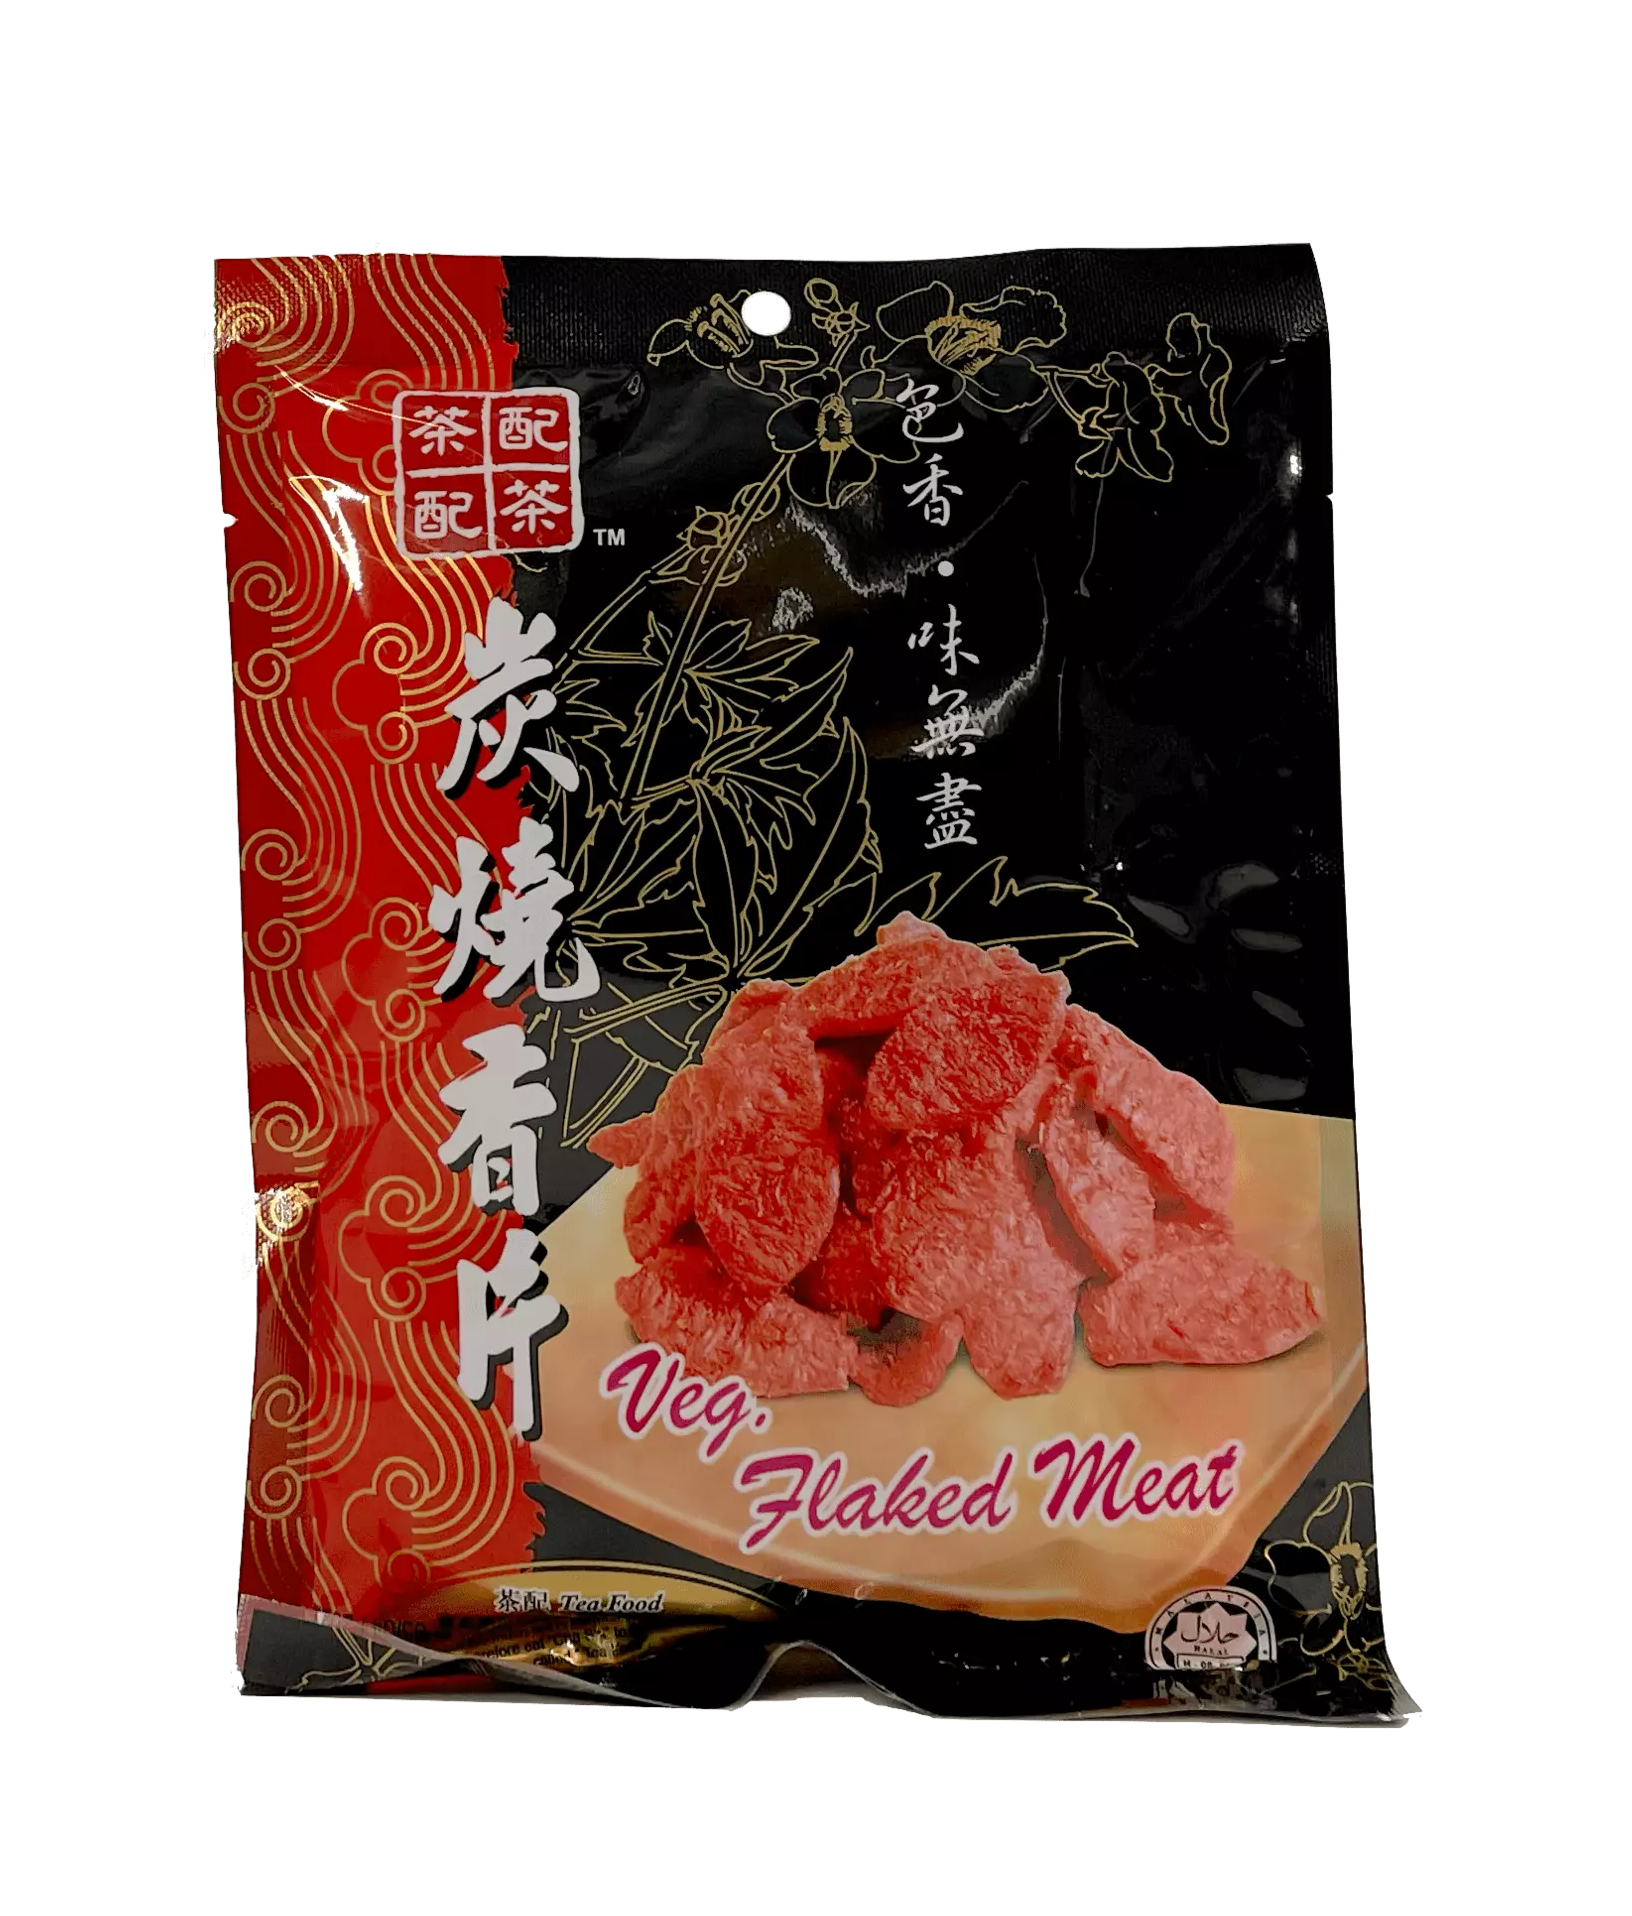 Vegan flaked meat 200g TSXP Taiwan